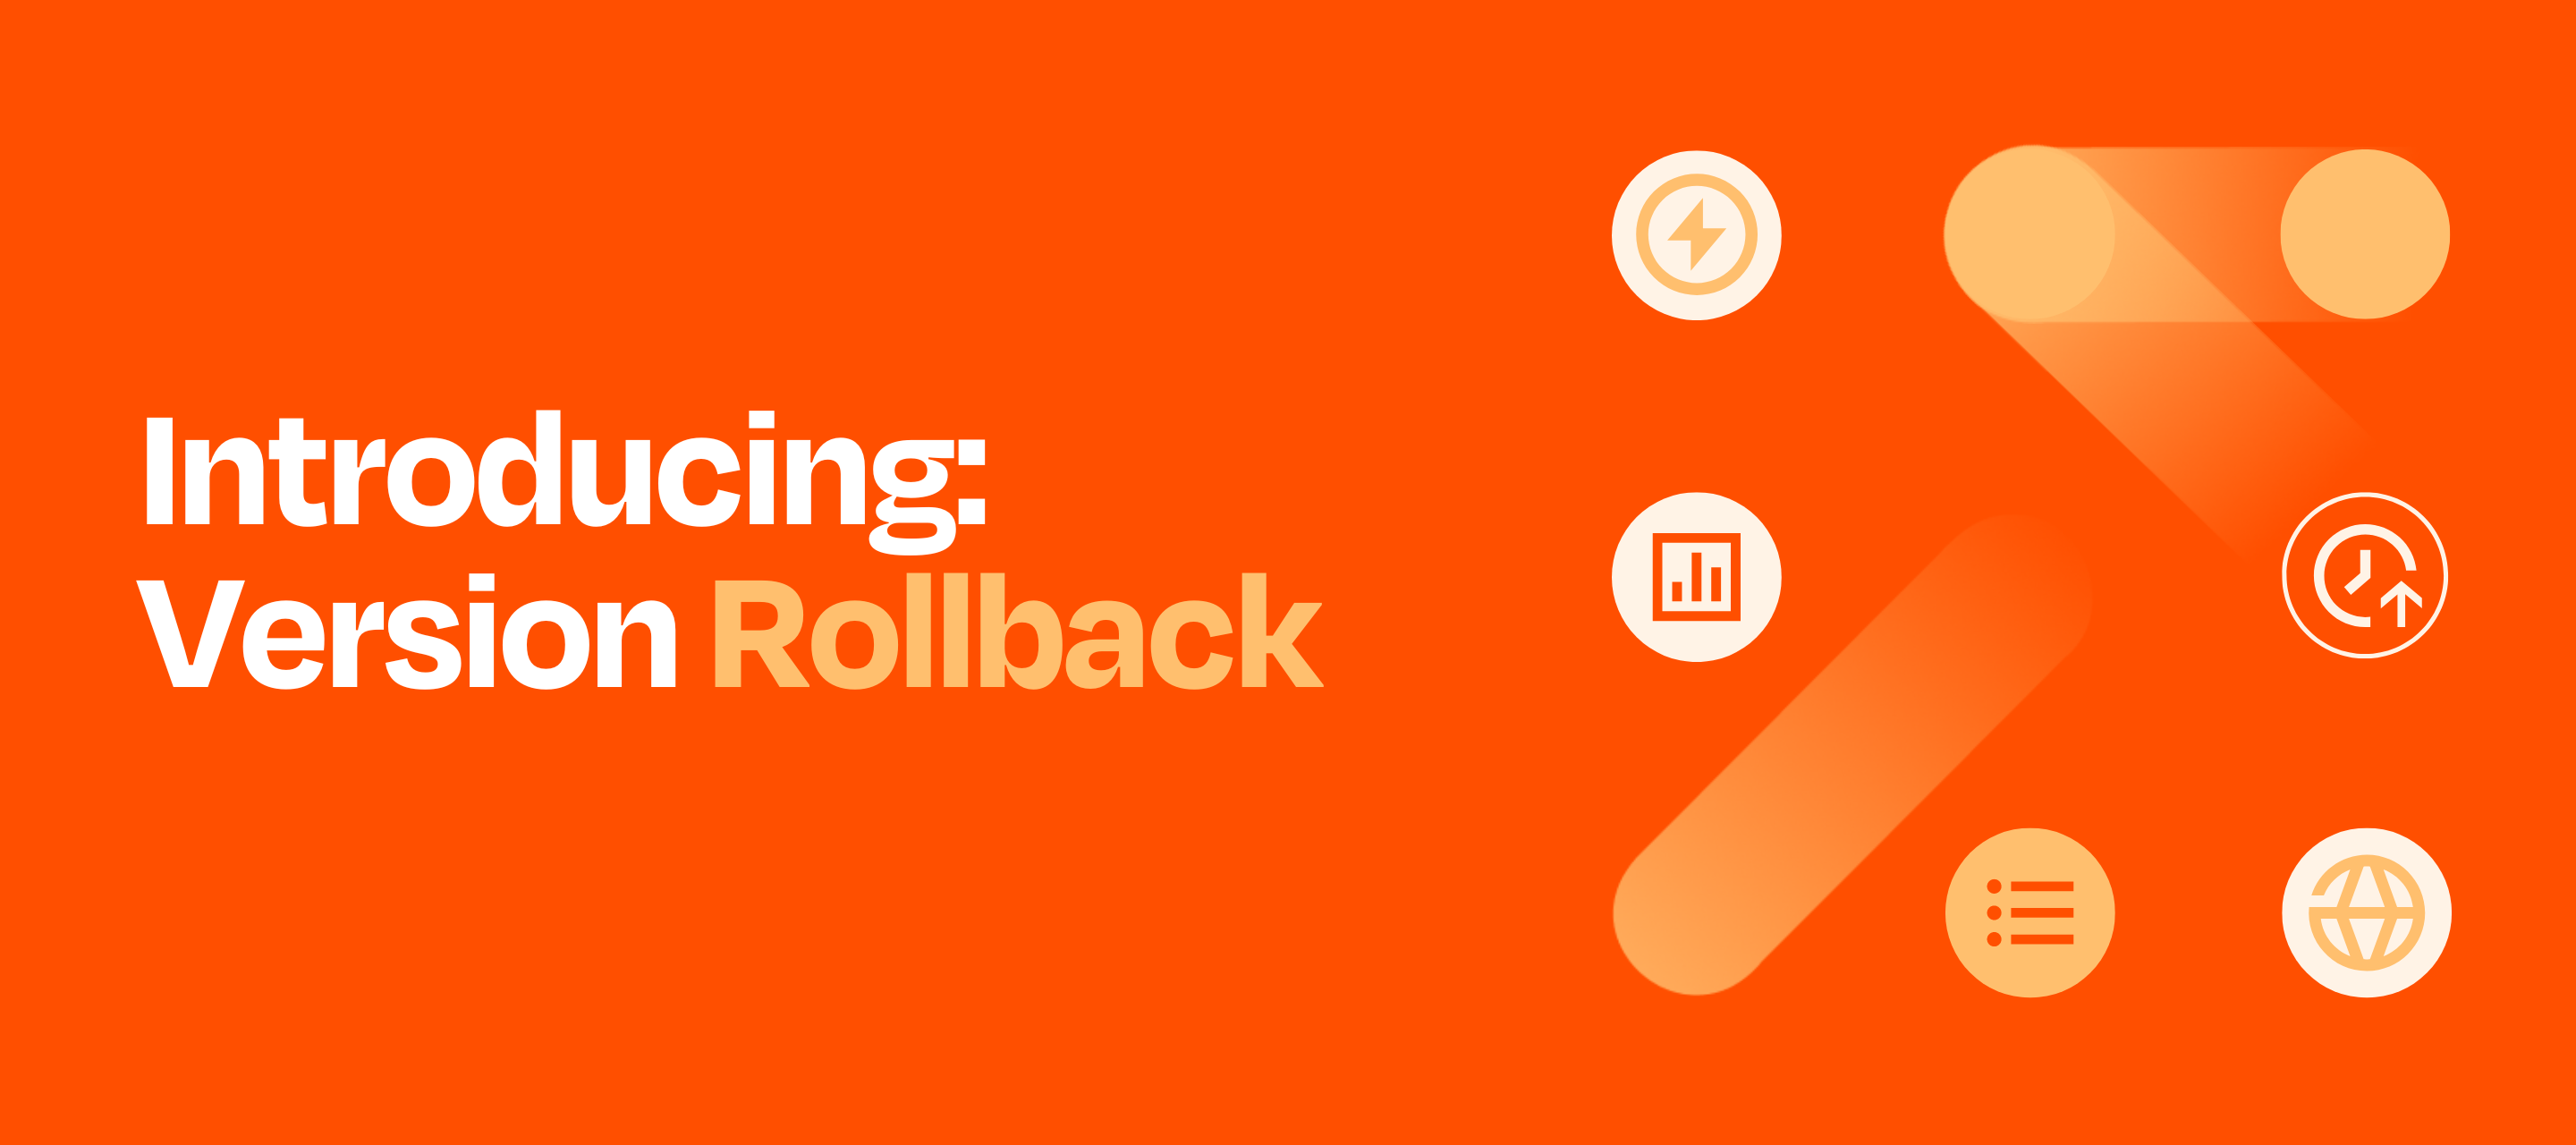 Introducing: Version Rollback